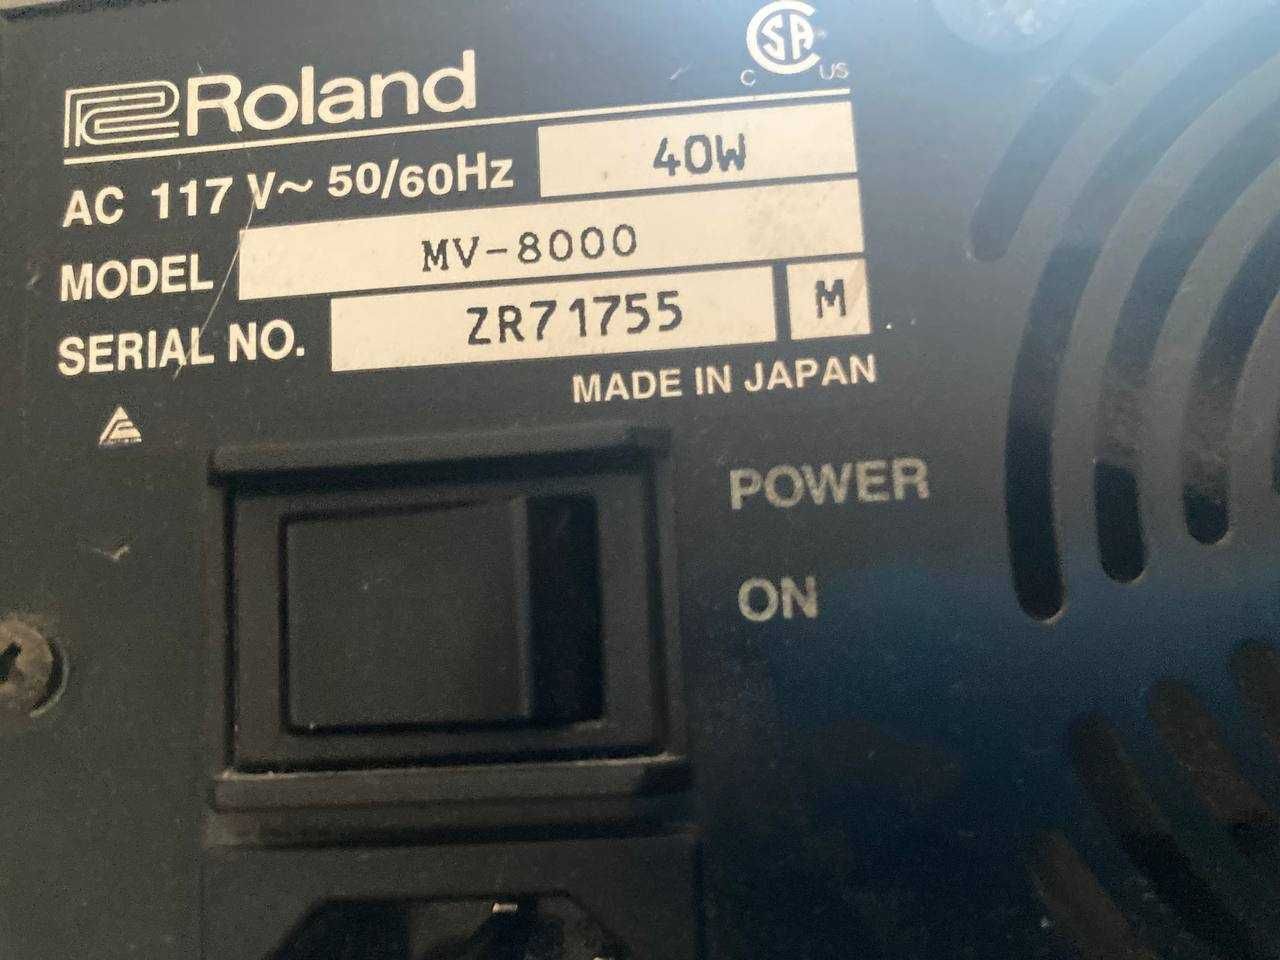 Roland Production Studio MV-8000